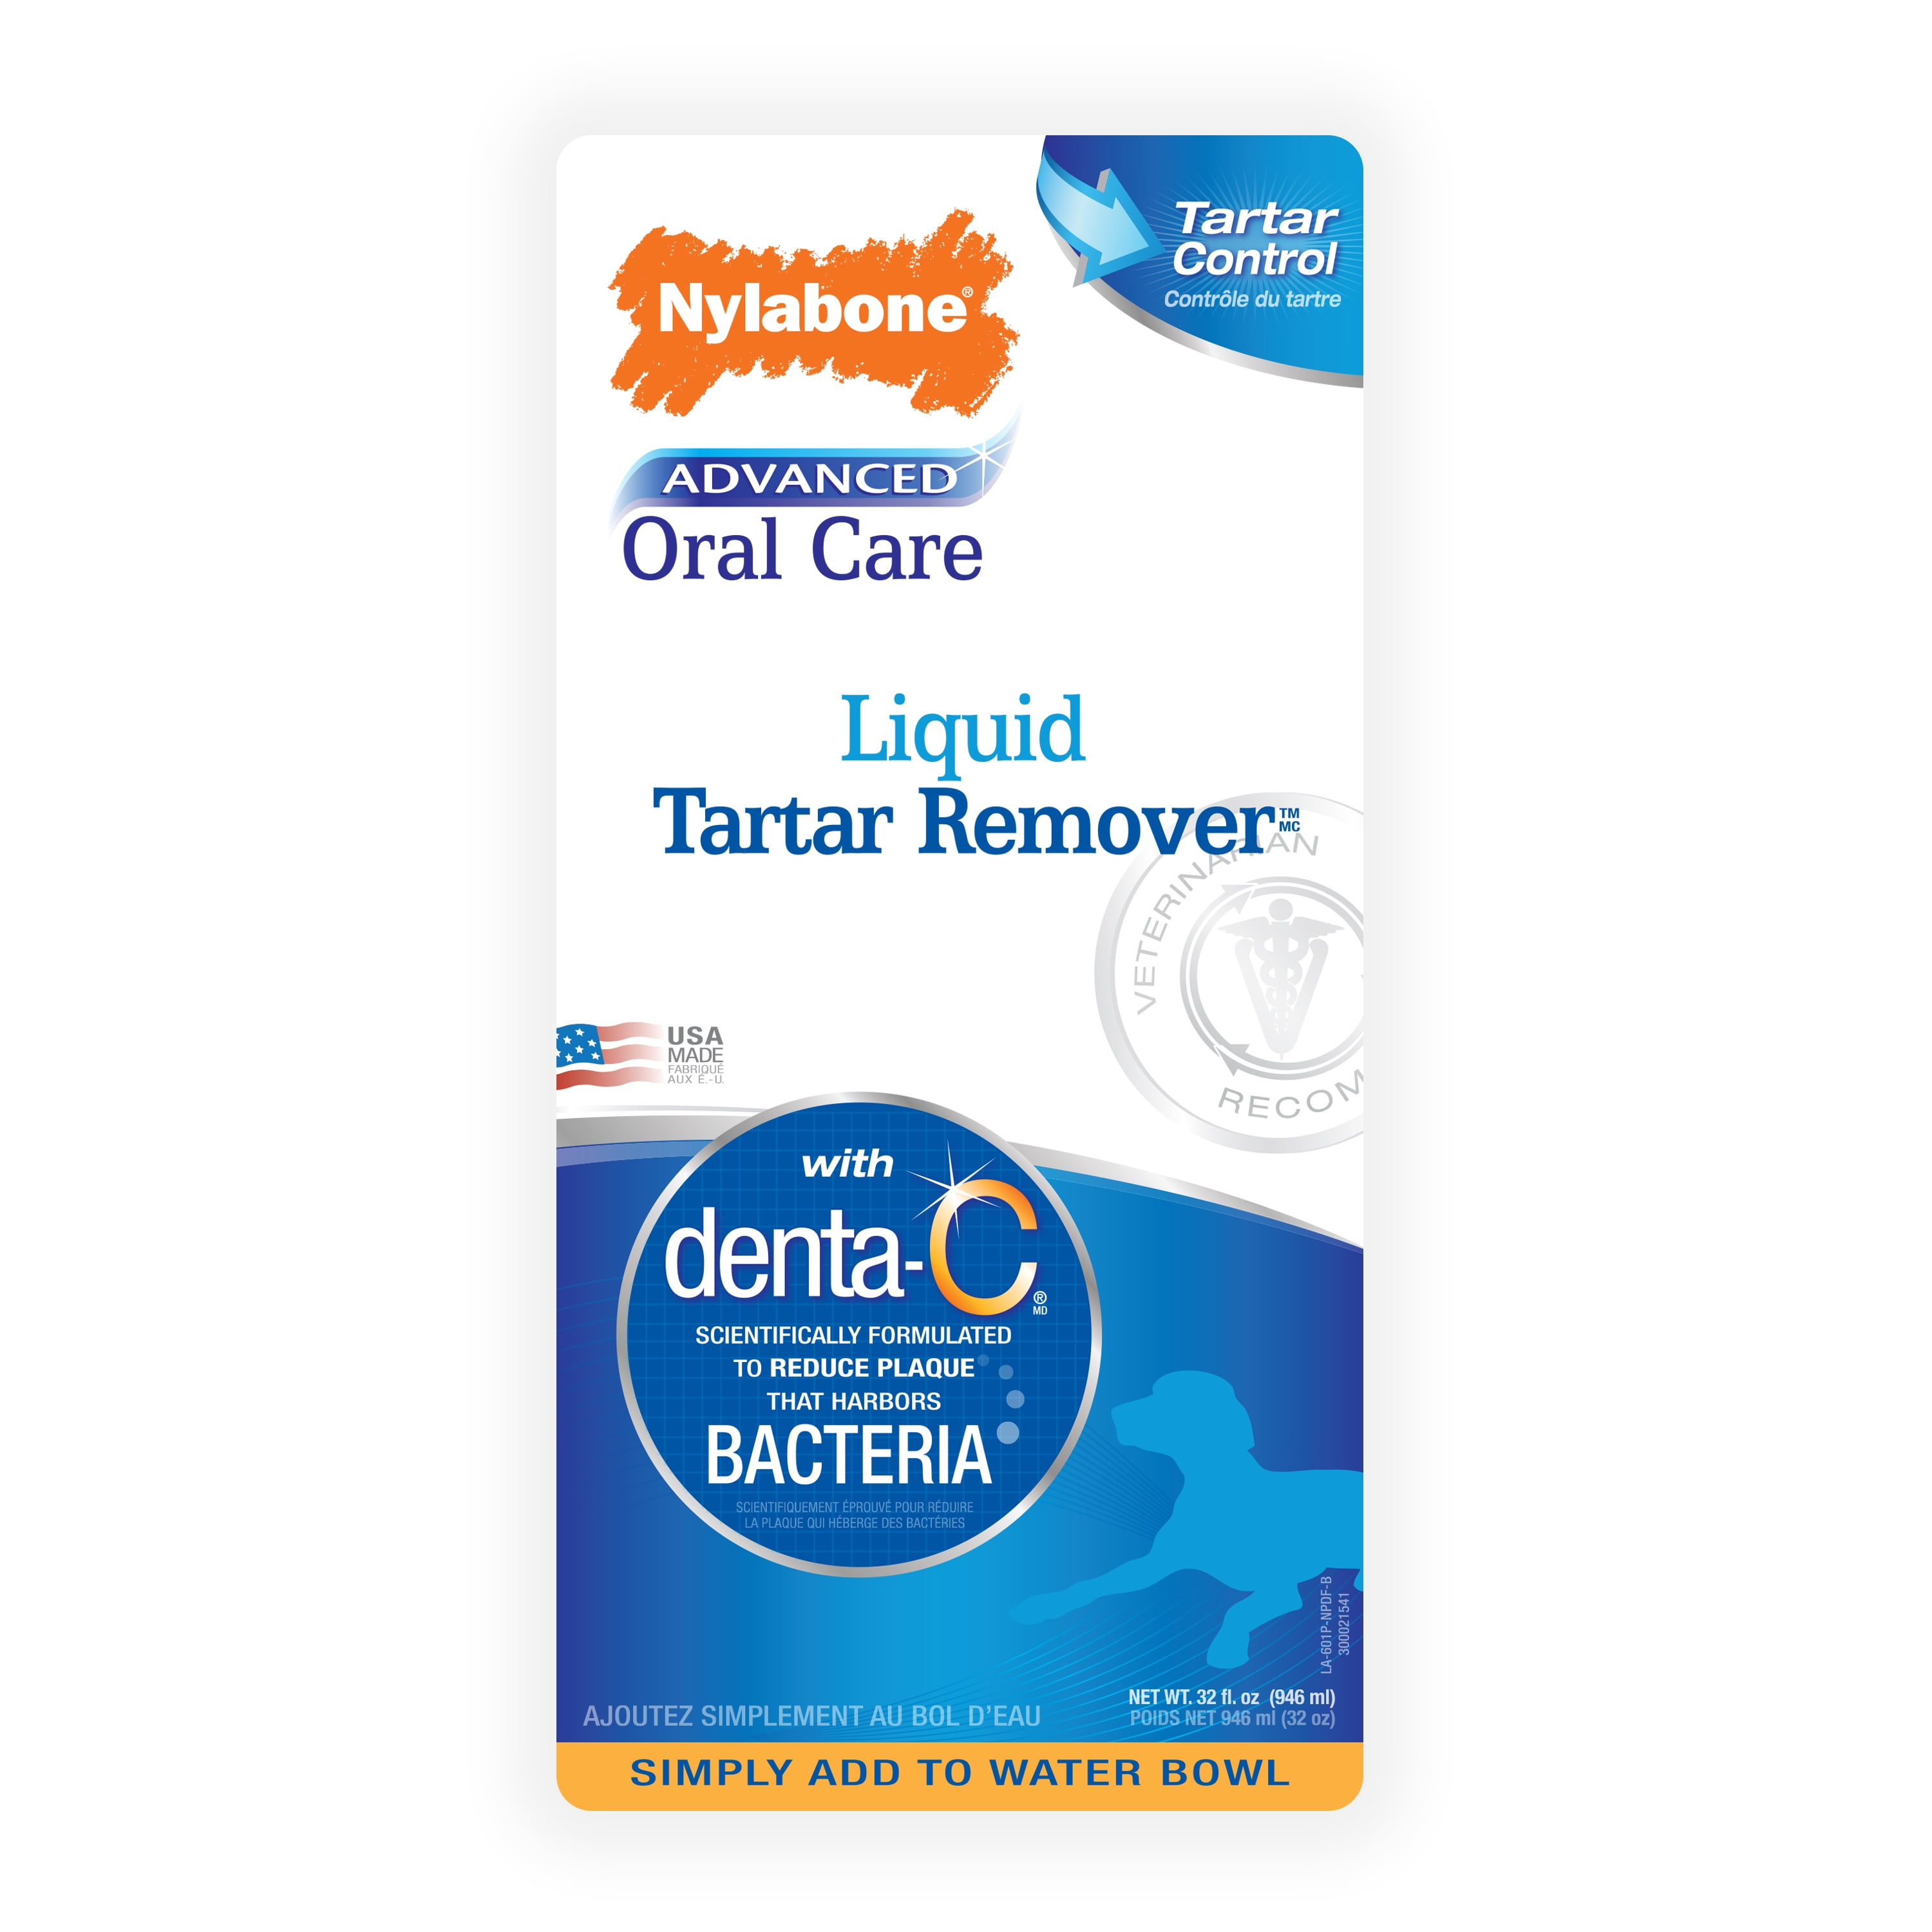 nylabone advanced oral care liquid tartar remover